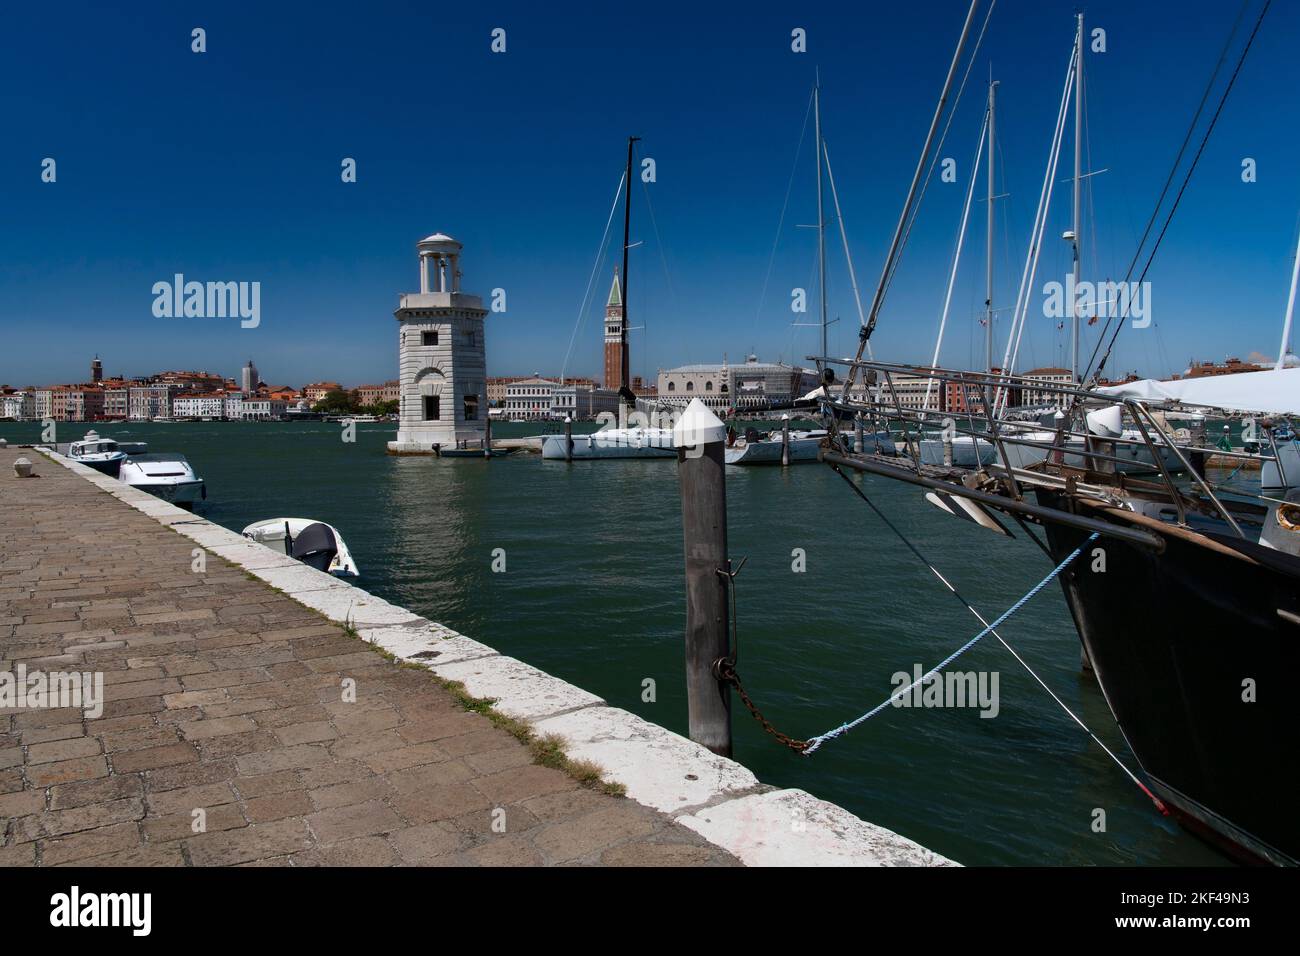 Zollturm und Campanile de San Marco, gesehen von der Insel San Giorgio Maggiore, Venedig, Venetien, Italien Stock Photo